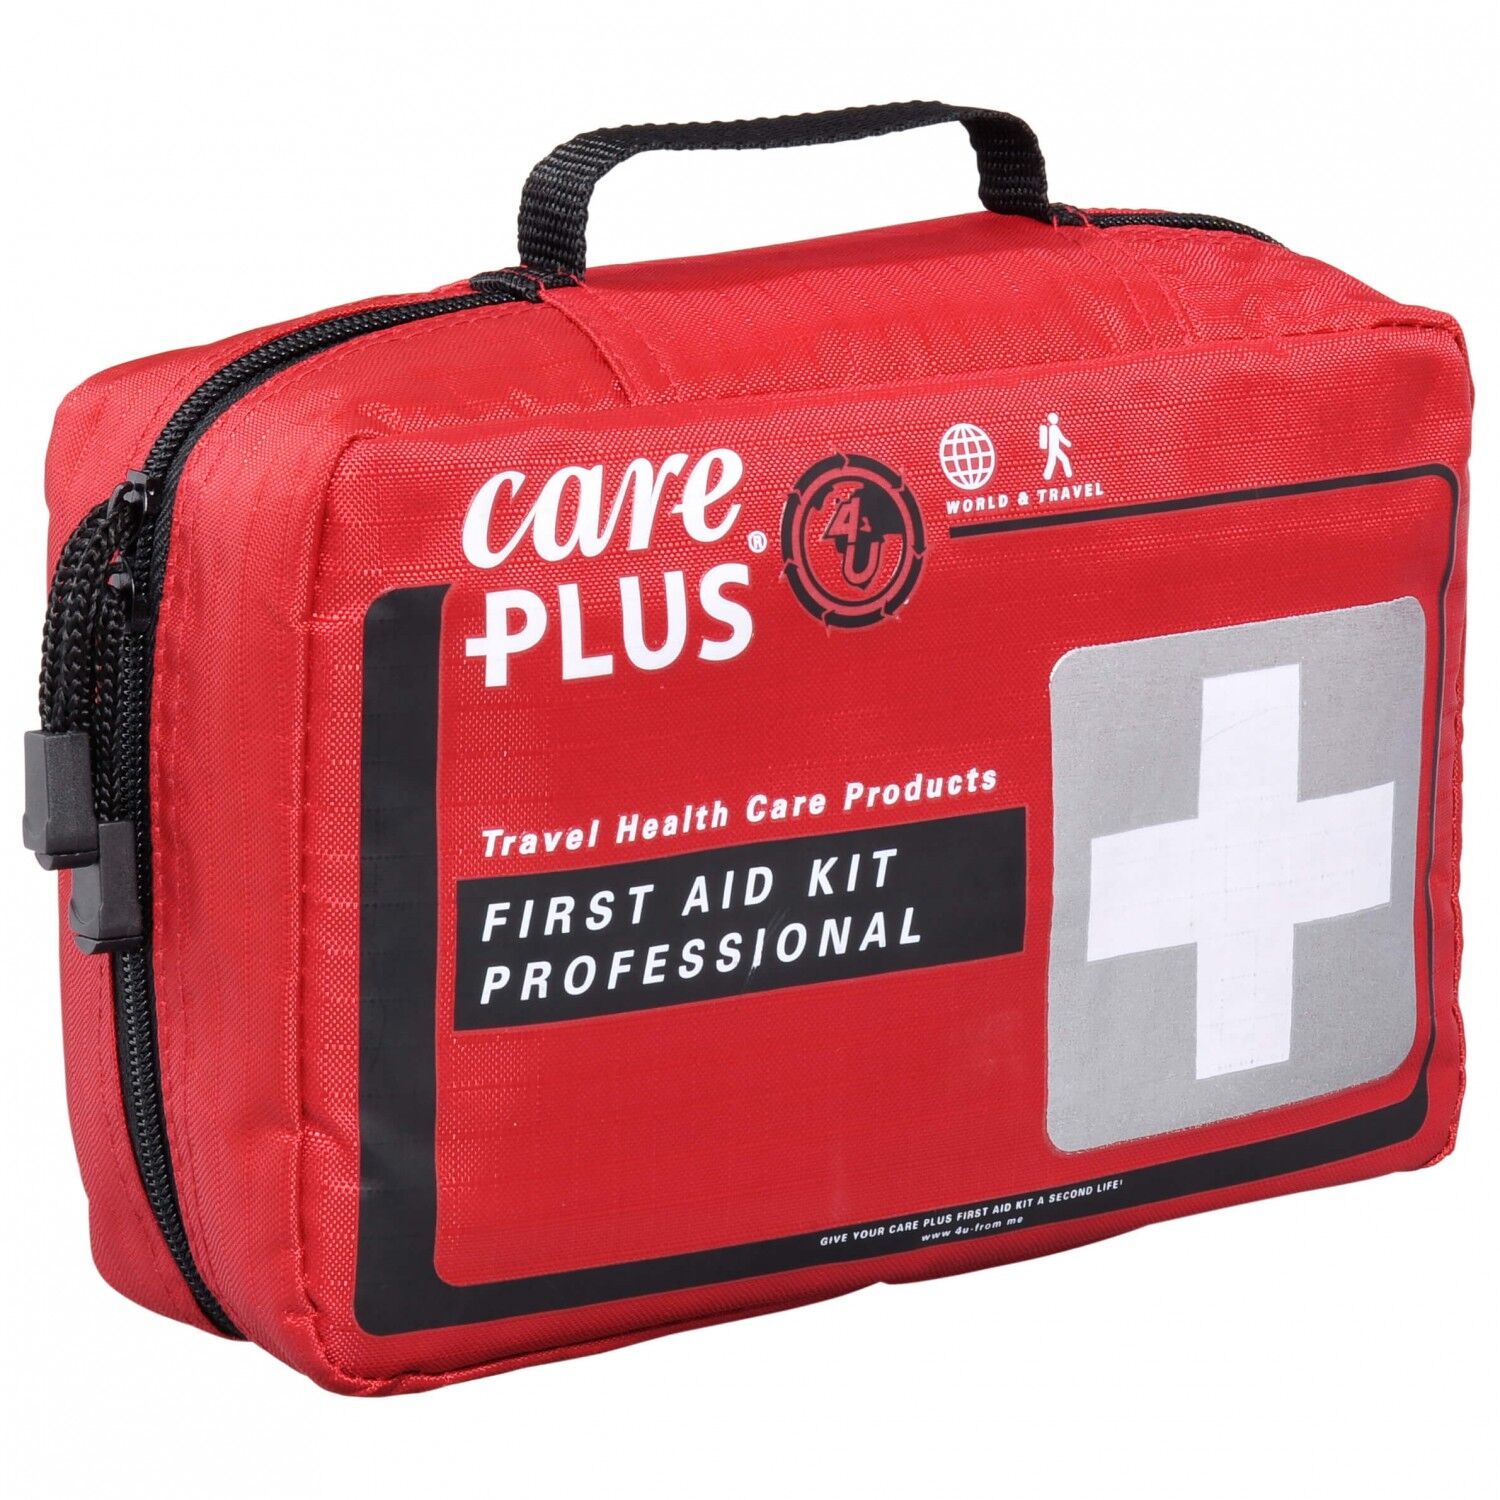 Care Plus First Aid Kit - Professional - EHBO-set